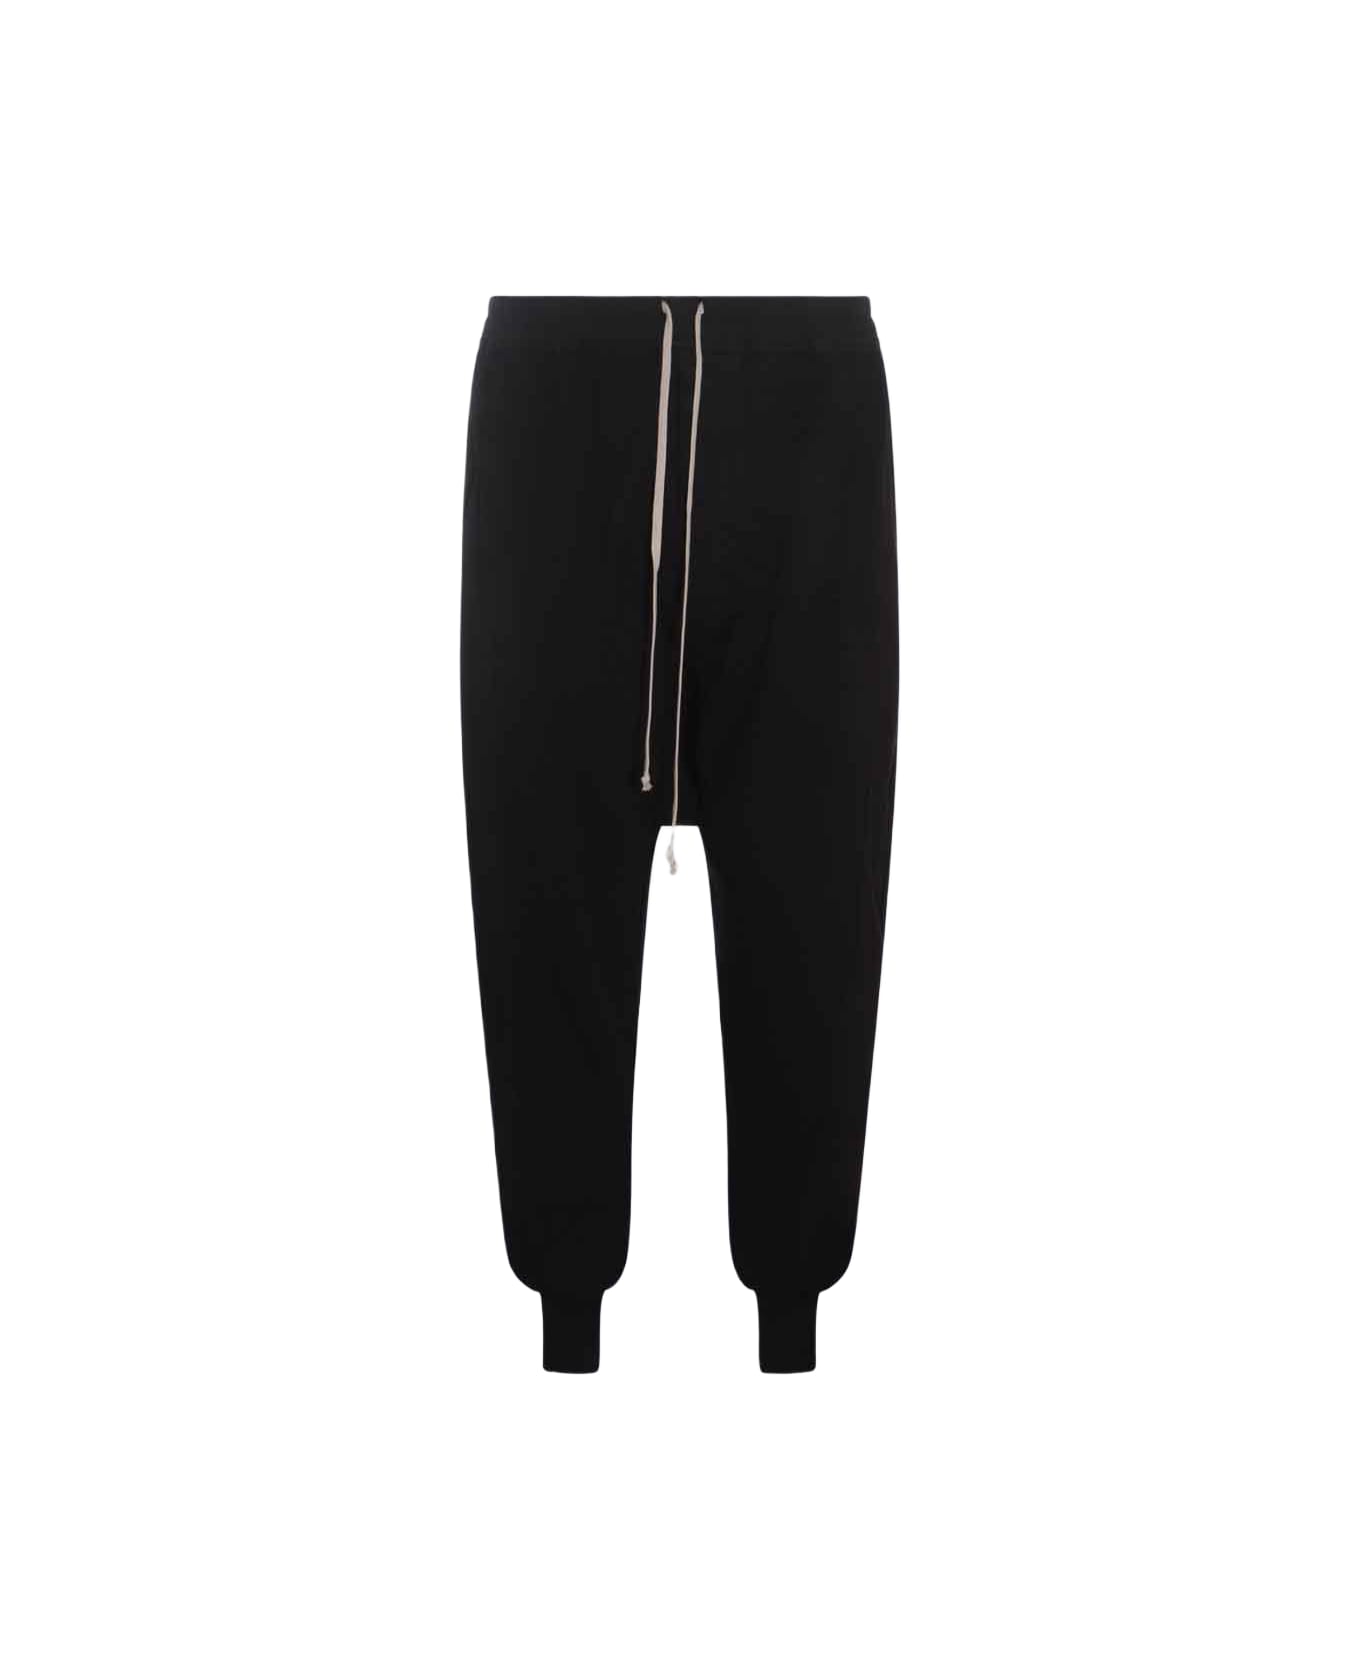 DRKSHDW Black Cotton Pants - Black スウェットパンツ